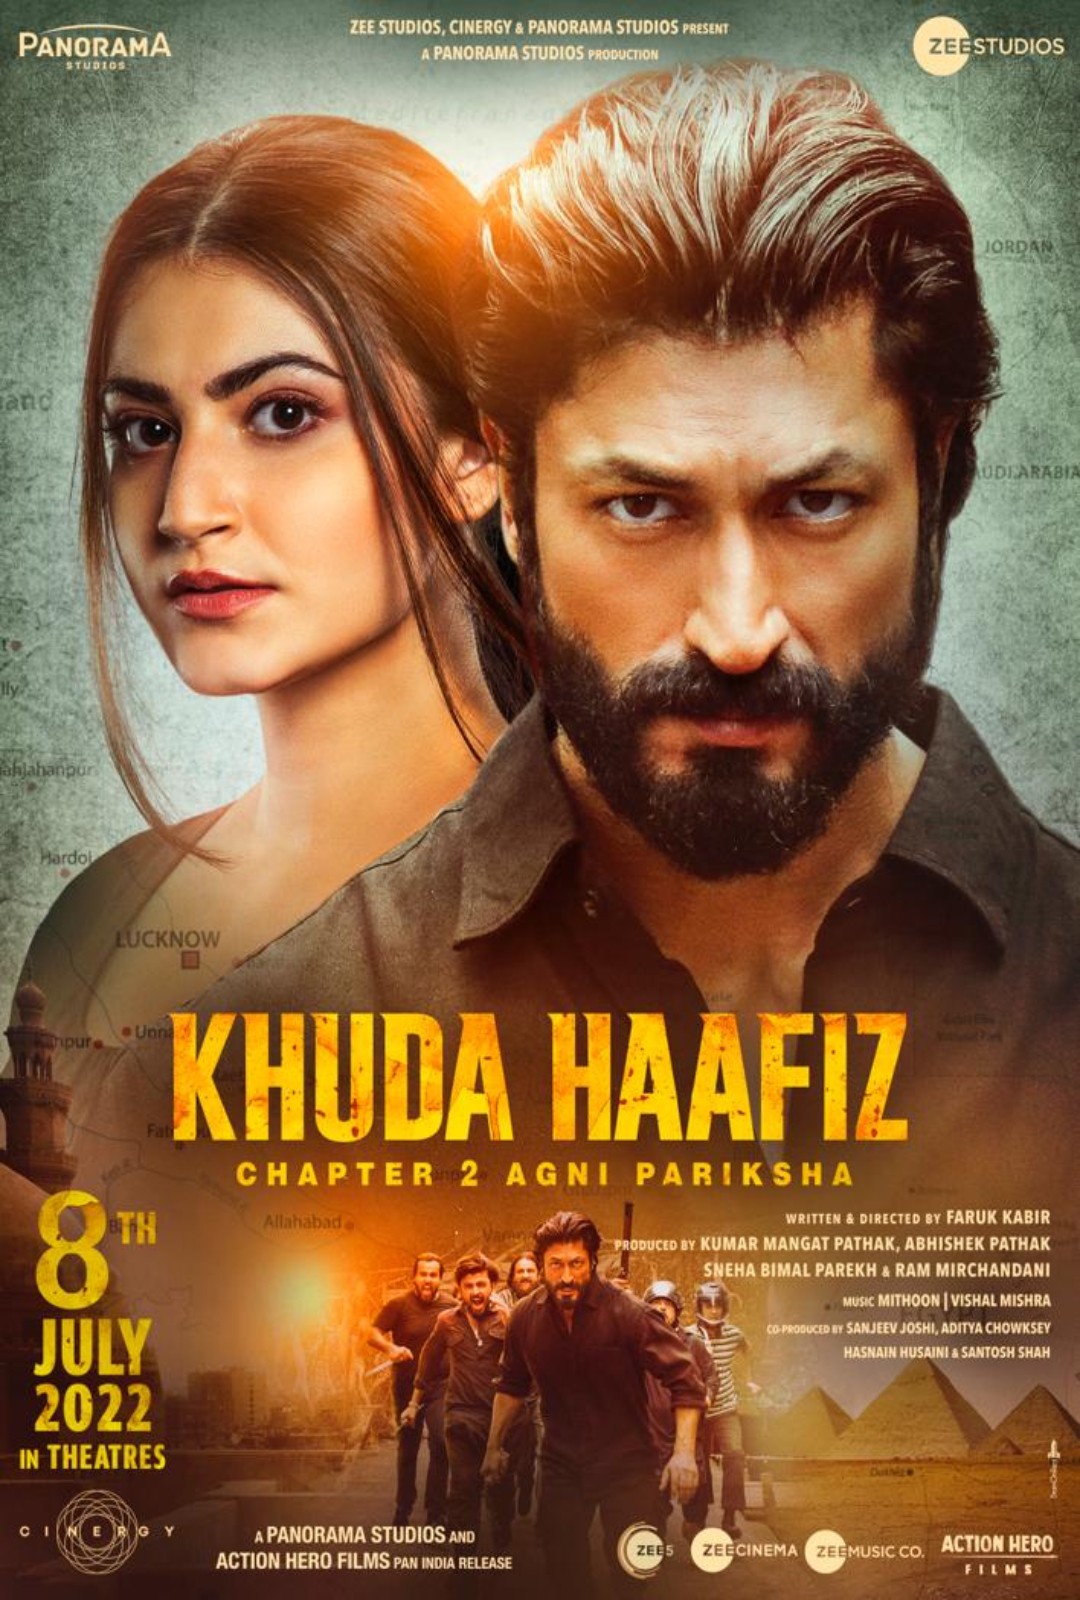 Khuda Haafiz Chapter 2 – Agni Pariksha (2022) New Bollywood Hindi Full Movie PreDVD